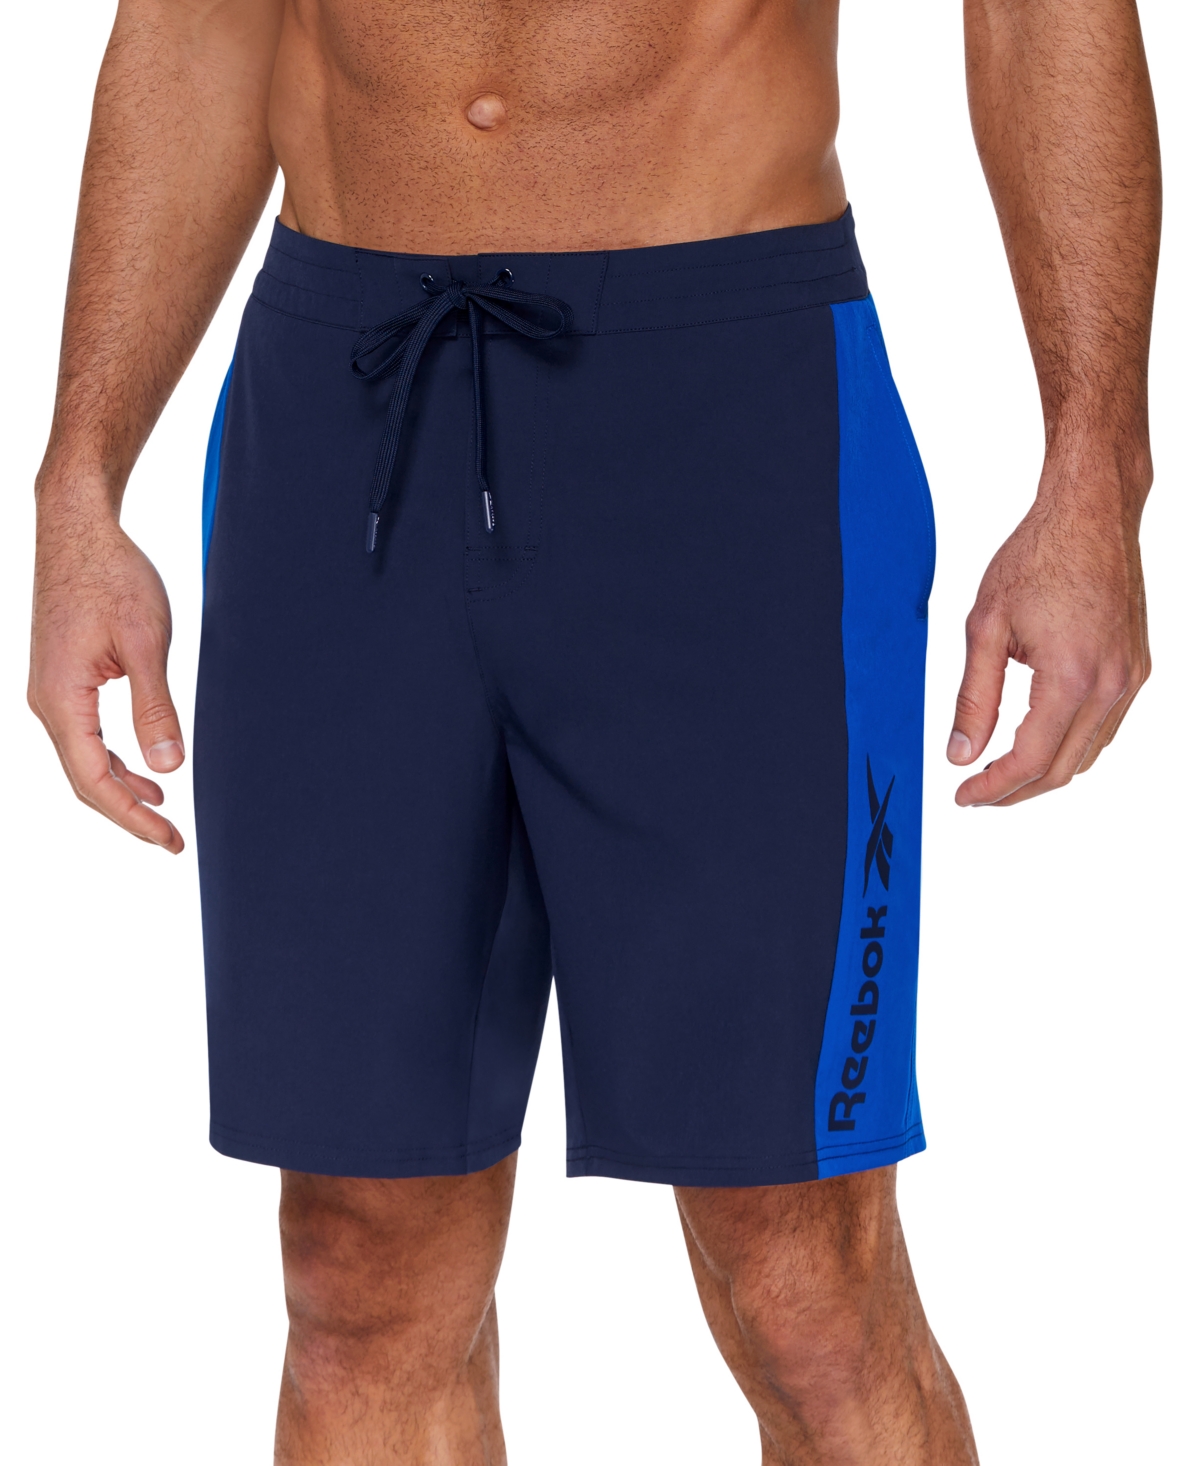 Men's 9" Colorblocked Board Shorts - Navy/Blue